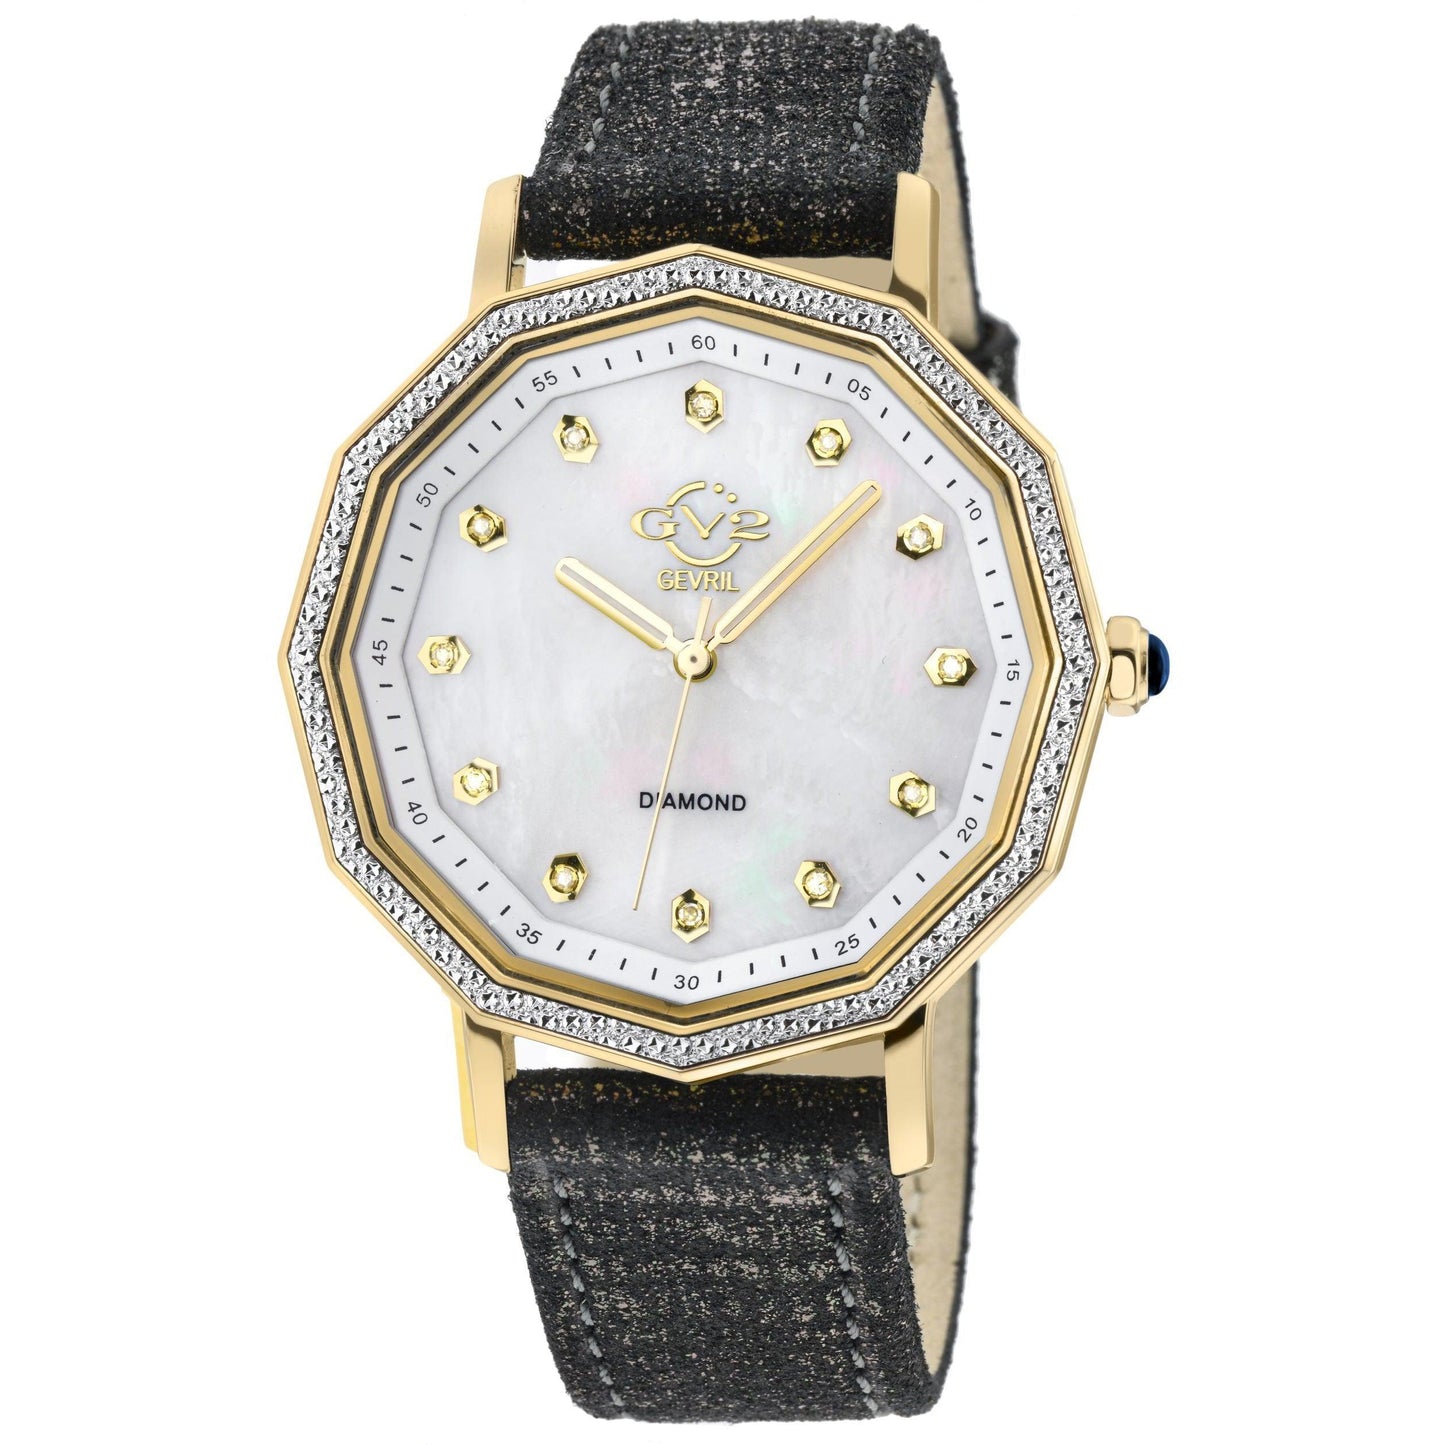 Gevril-Luxury-Swiss-Watches-GV2 Spello Diamond-14501